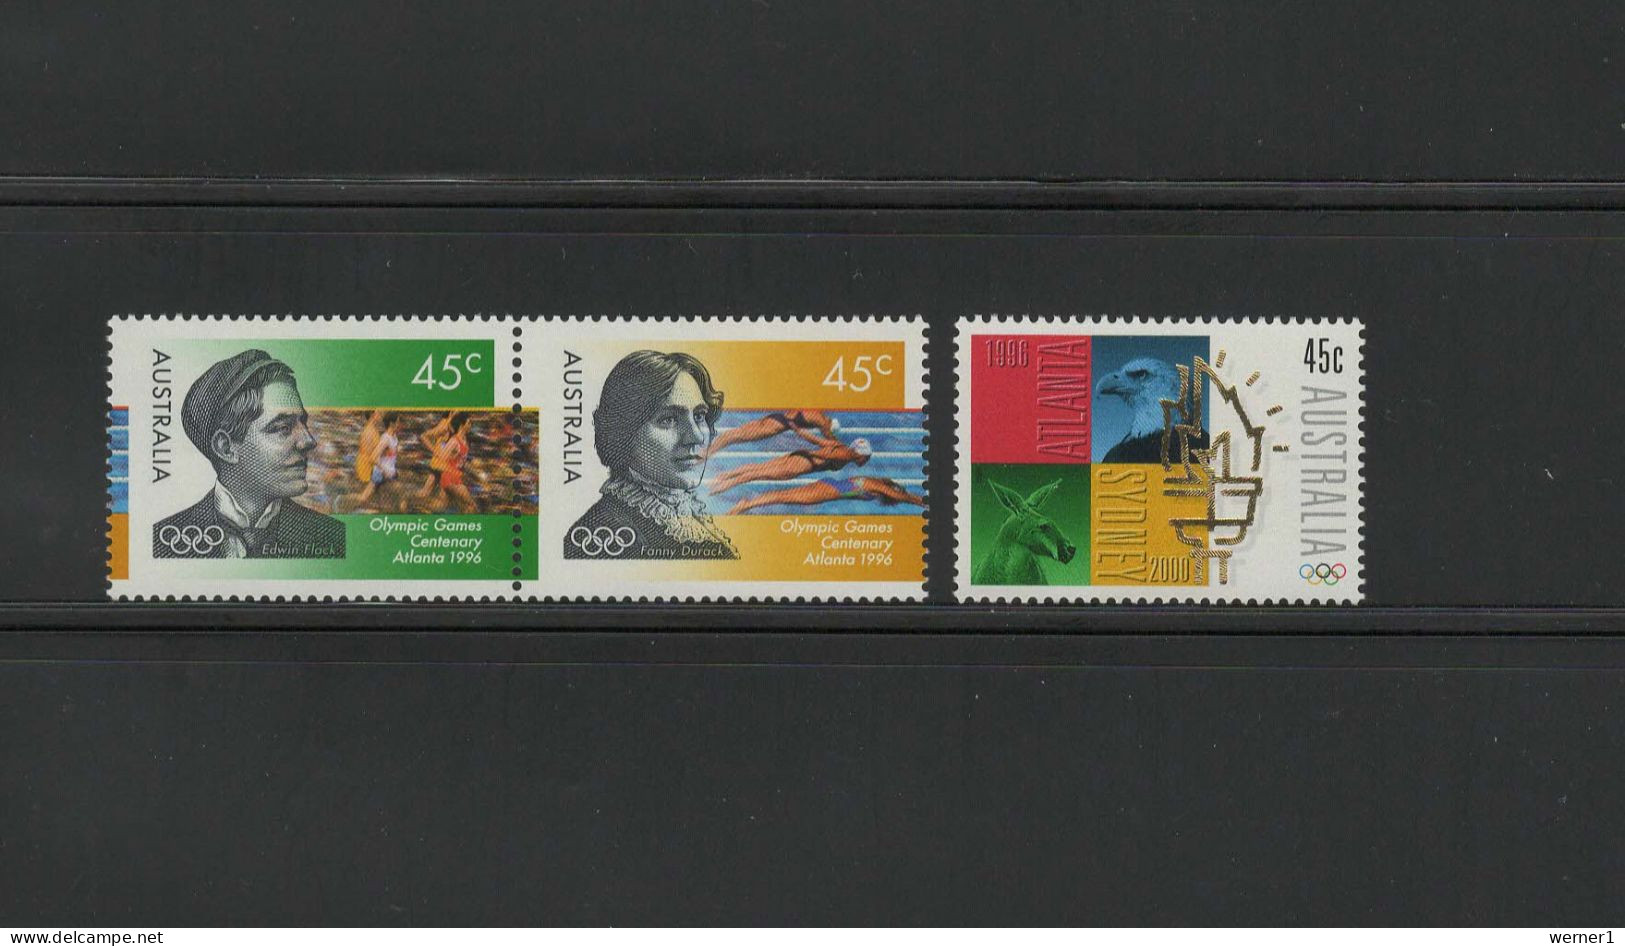 Australia 1996 Olympic Games Atlanta 3 Stamps MNH - Ete 1996: Atlanta